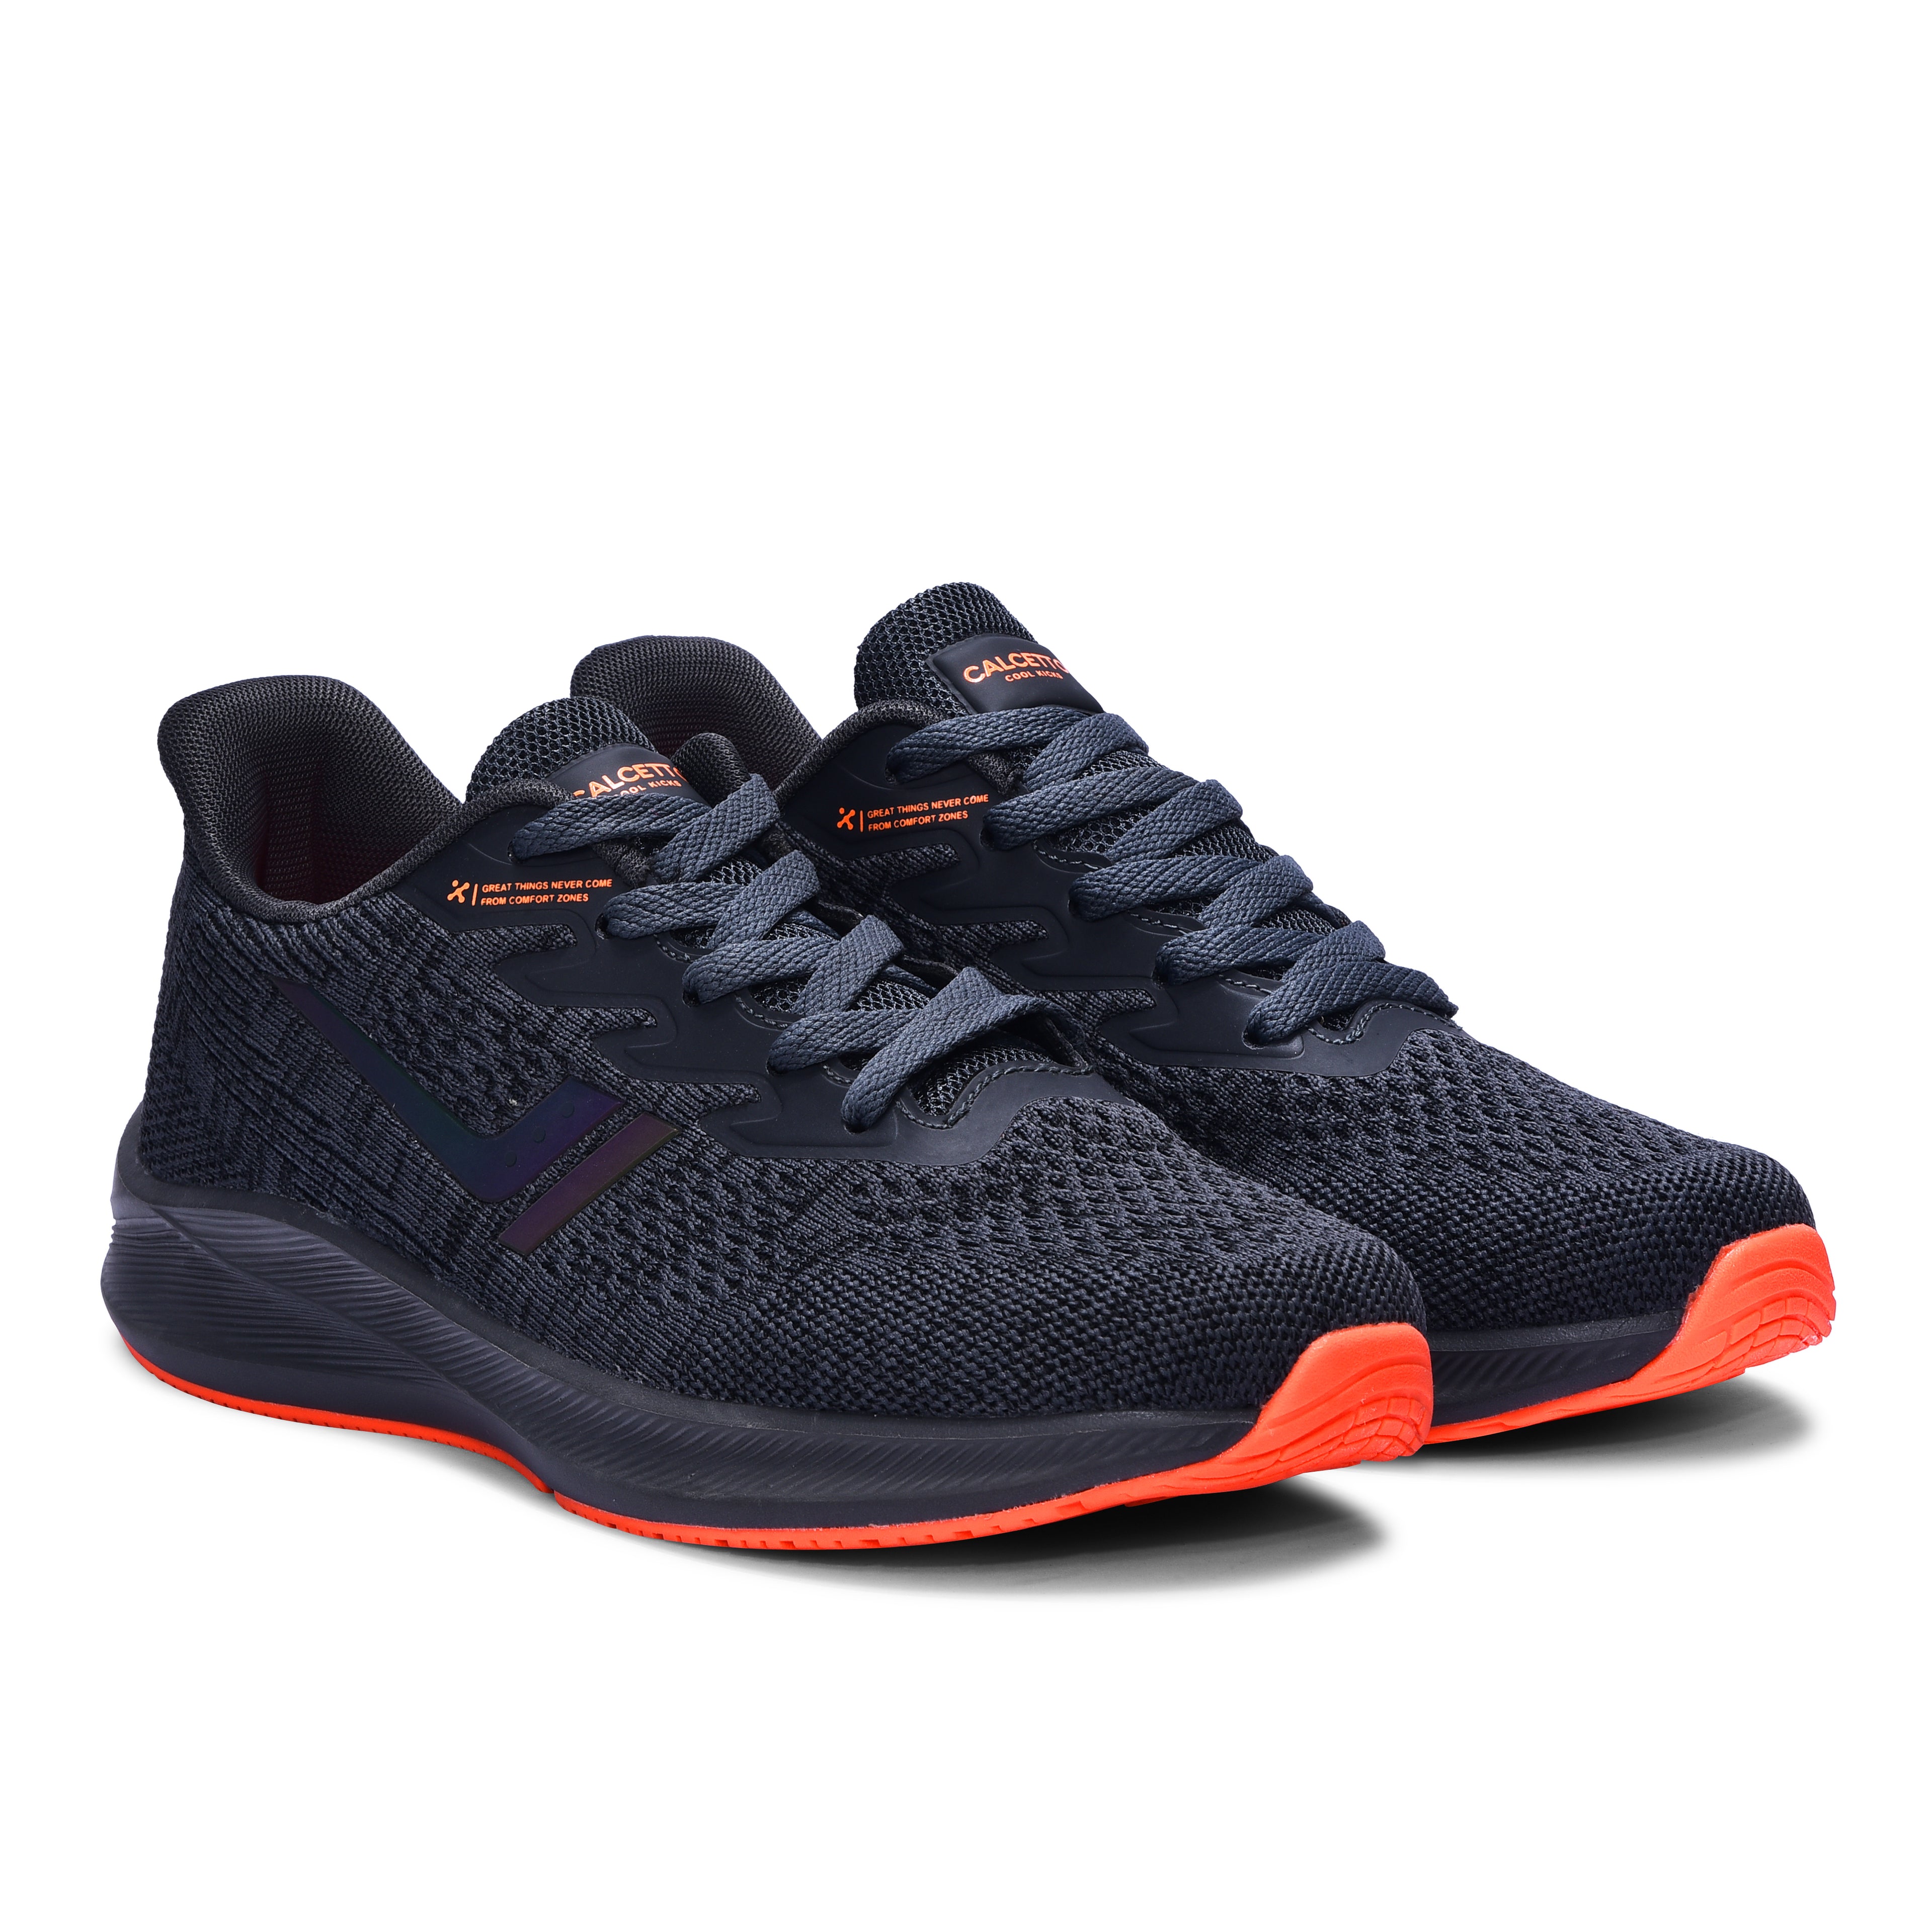 Calcetto CLT-0964 D Grey Orange Running Shoe For Men